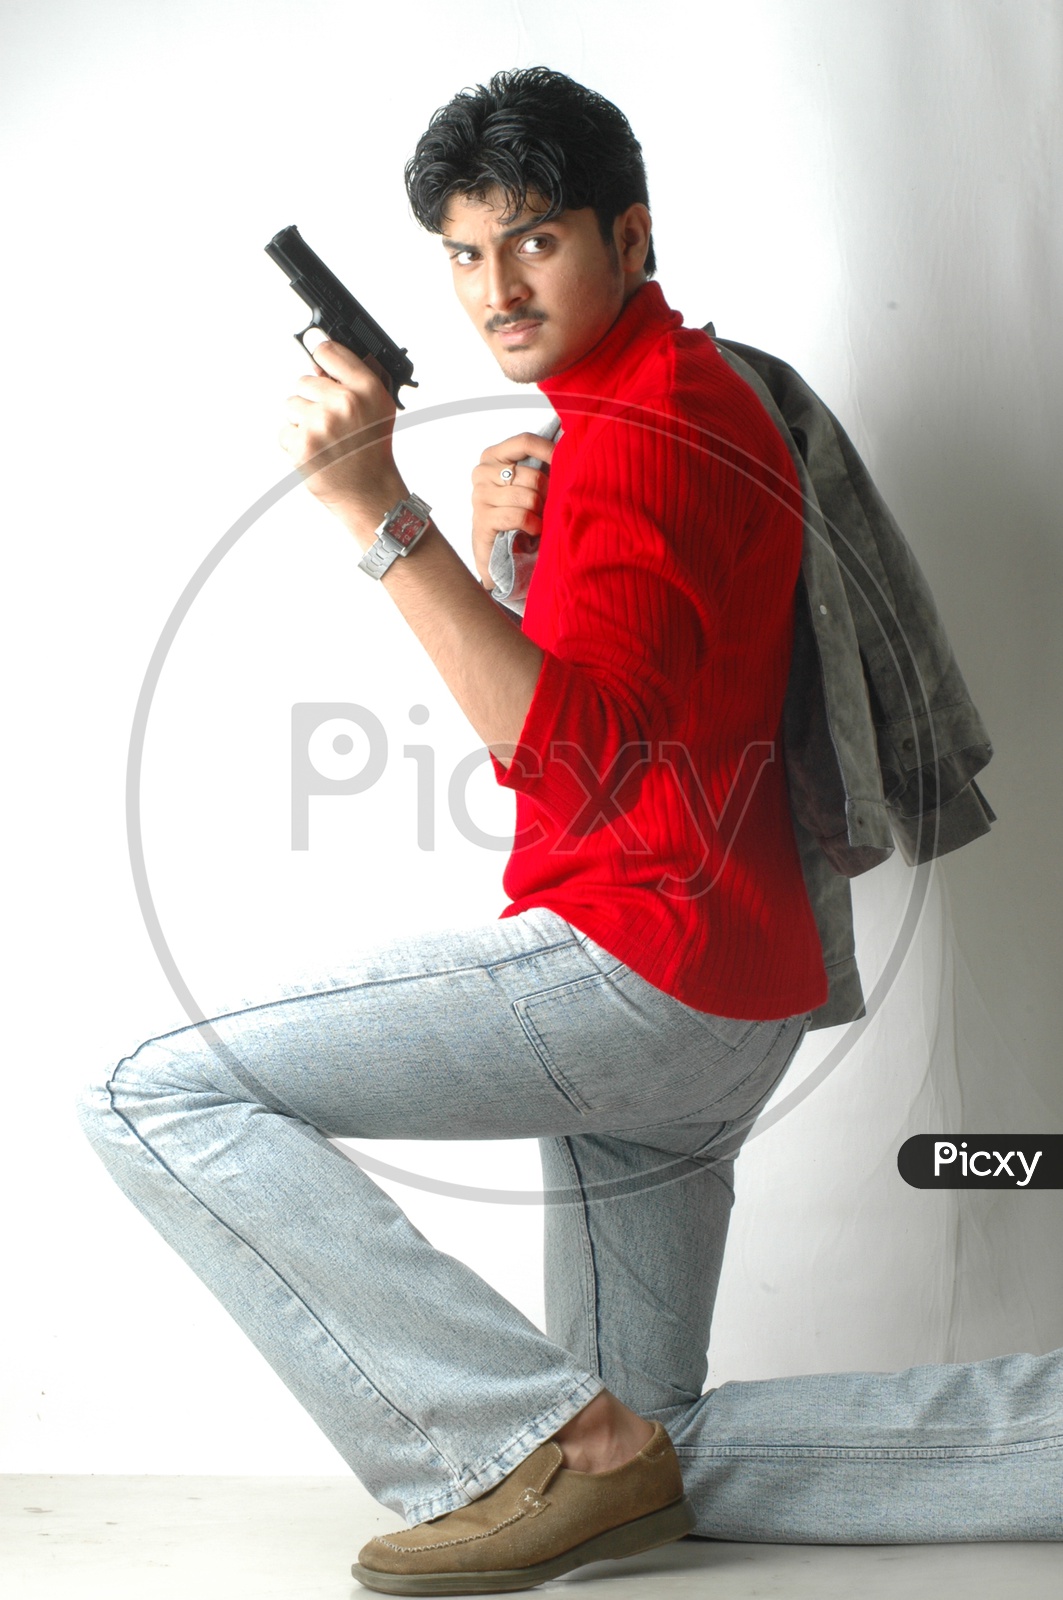 Confident Young Man Burglar Posing Gun Stock Photo 481924075 | Shutterstock